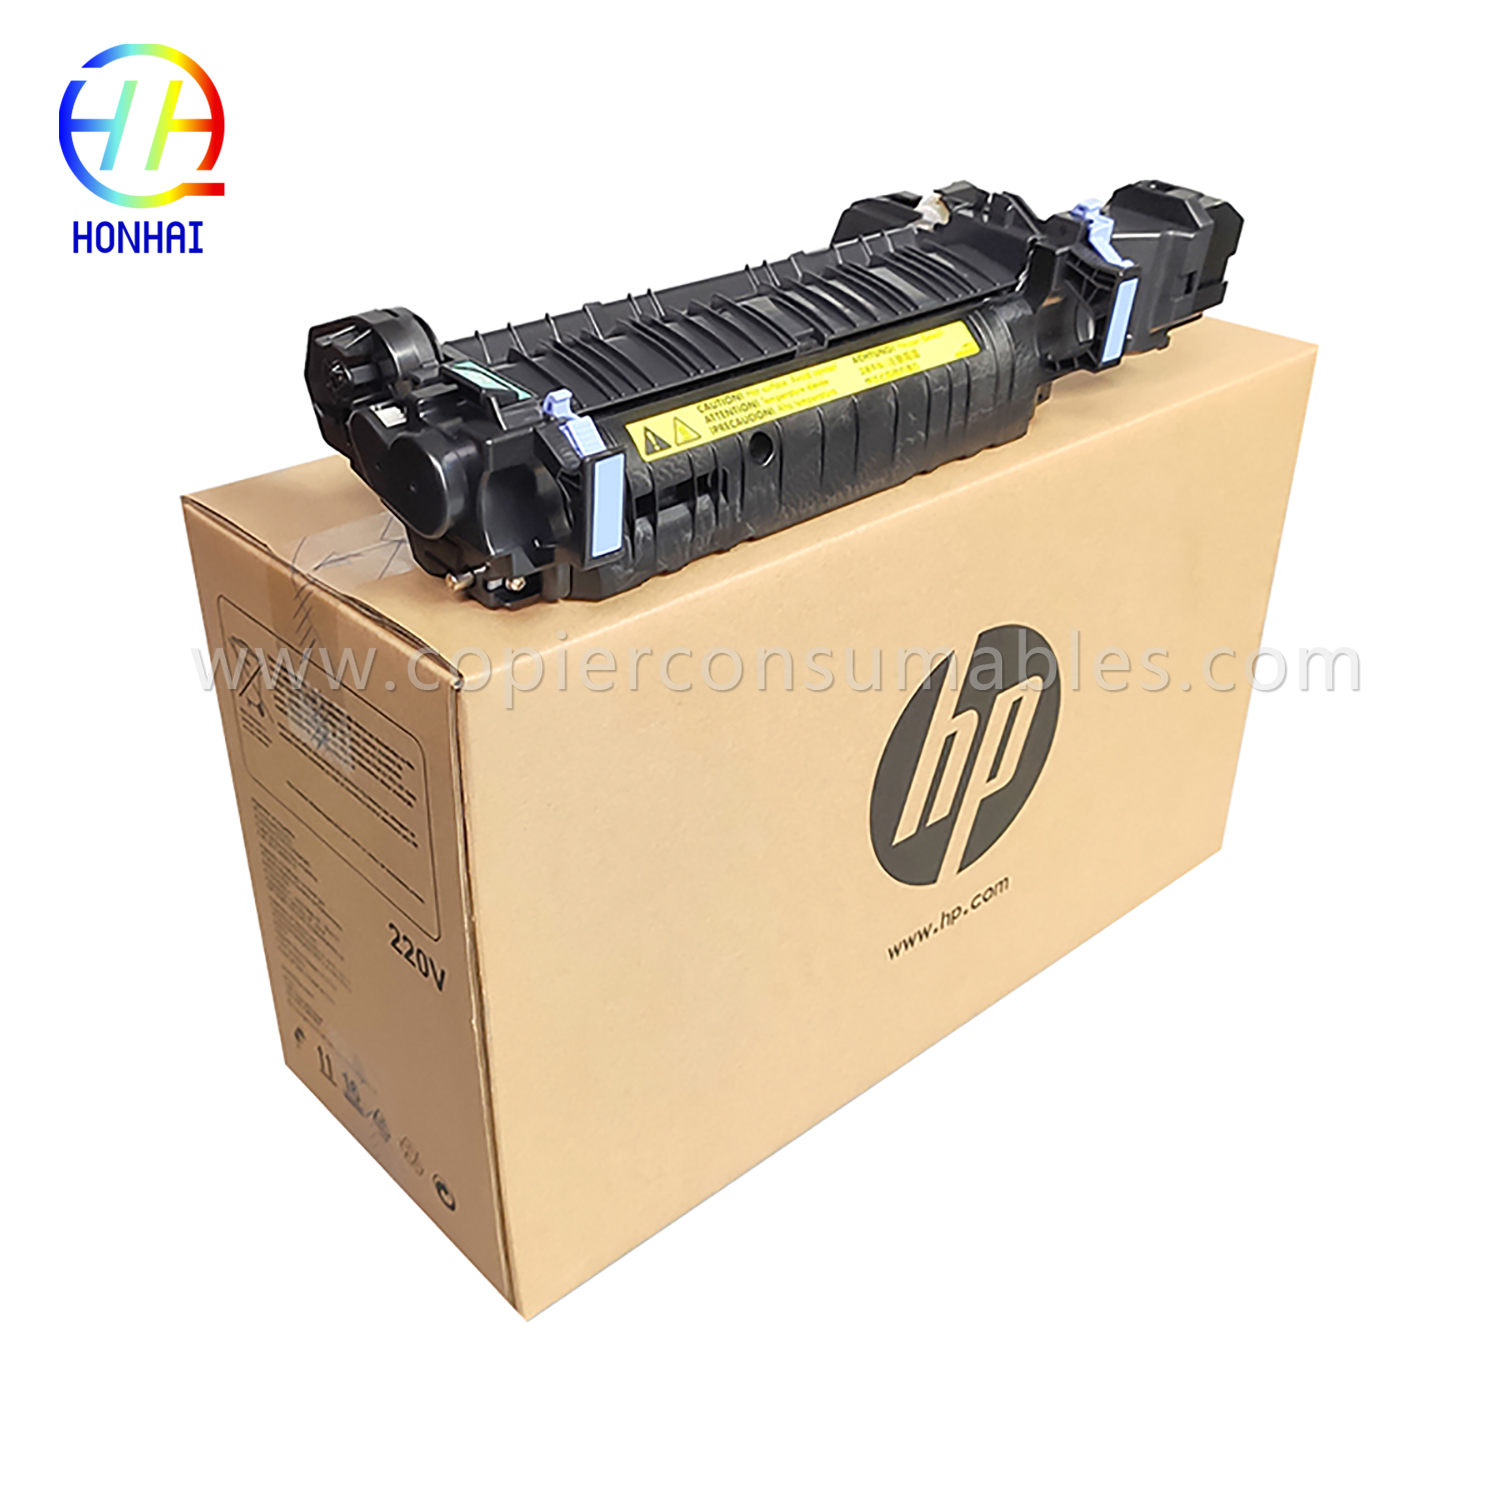 Kit Fuser untuk HP Cp4025 (CE247A) 220V (1)